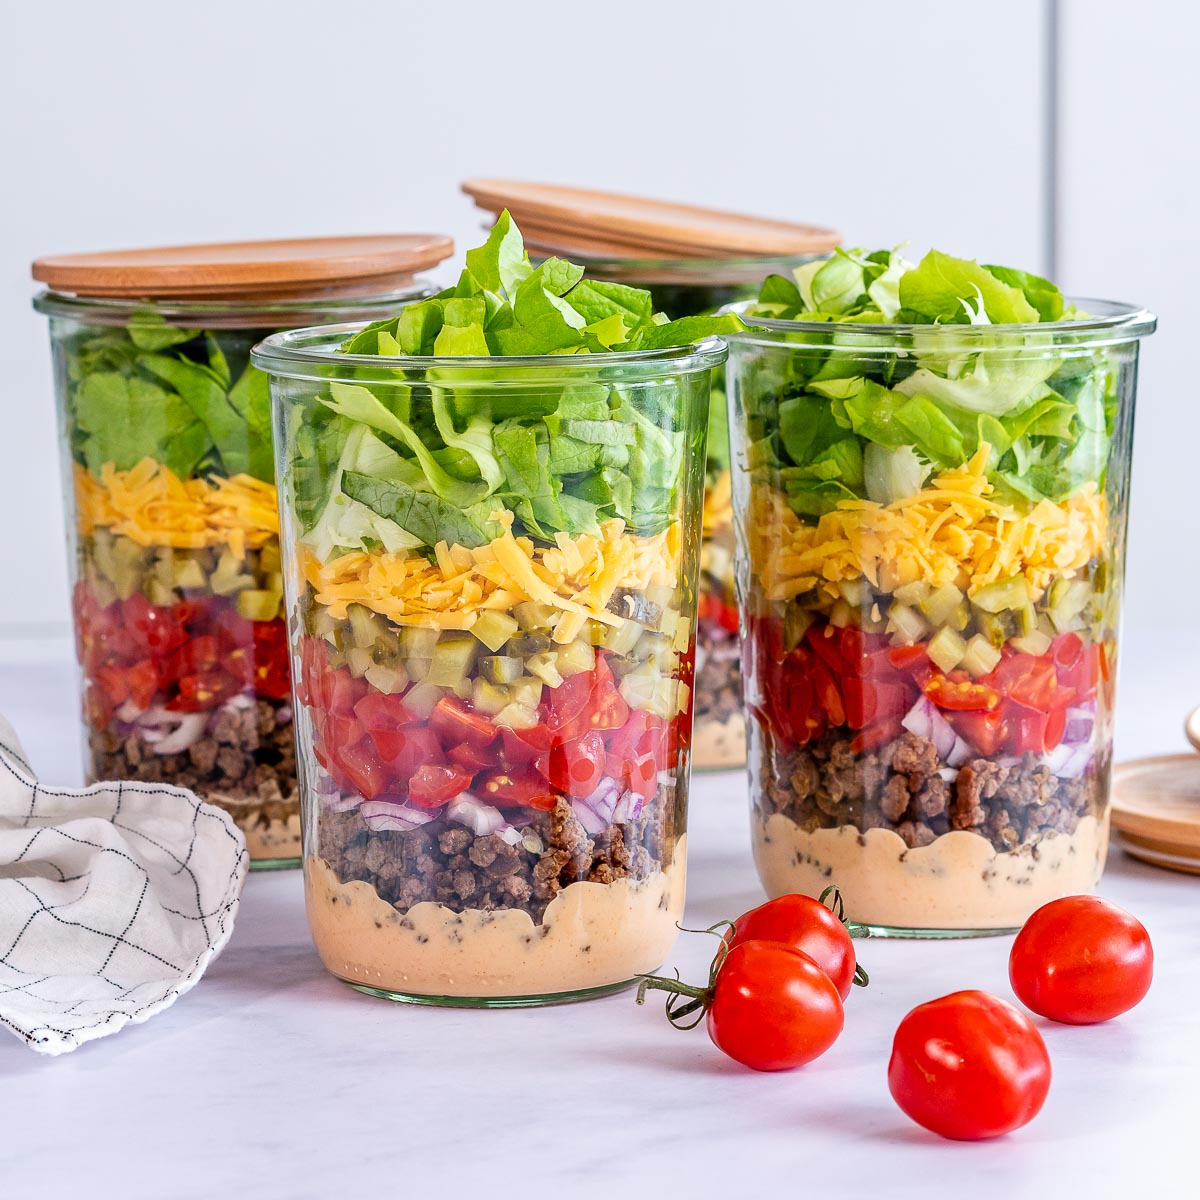 https://cleanfoodcrush.com/wp-content/uploads/2021/02/Cheeseburger-Salad-in-a-Jar-Clean-Eating-Printable-Recipe-Clean-Food-Crush.jpg